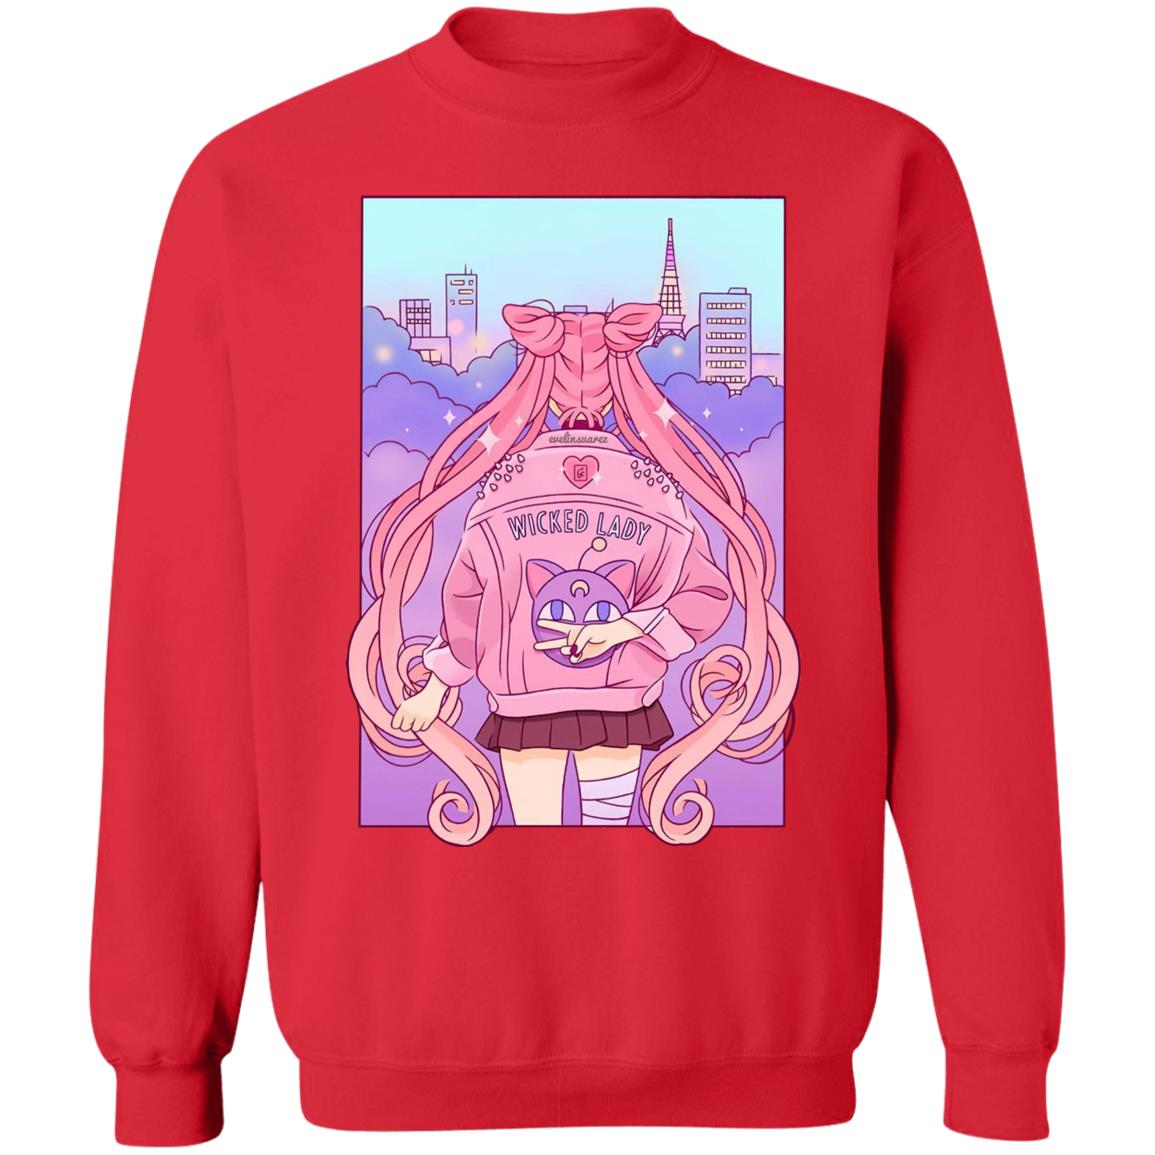 Sailor Moon – Wicked Lady Sweatshirt